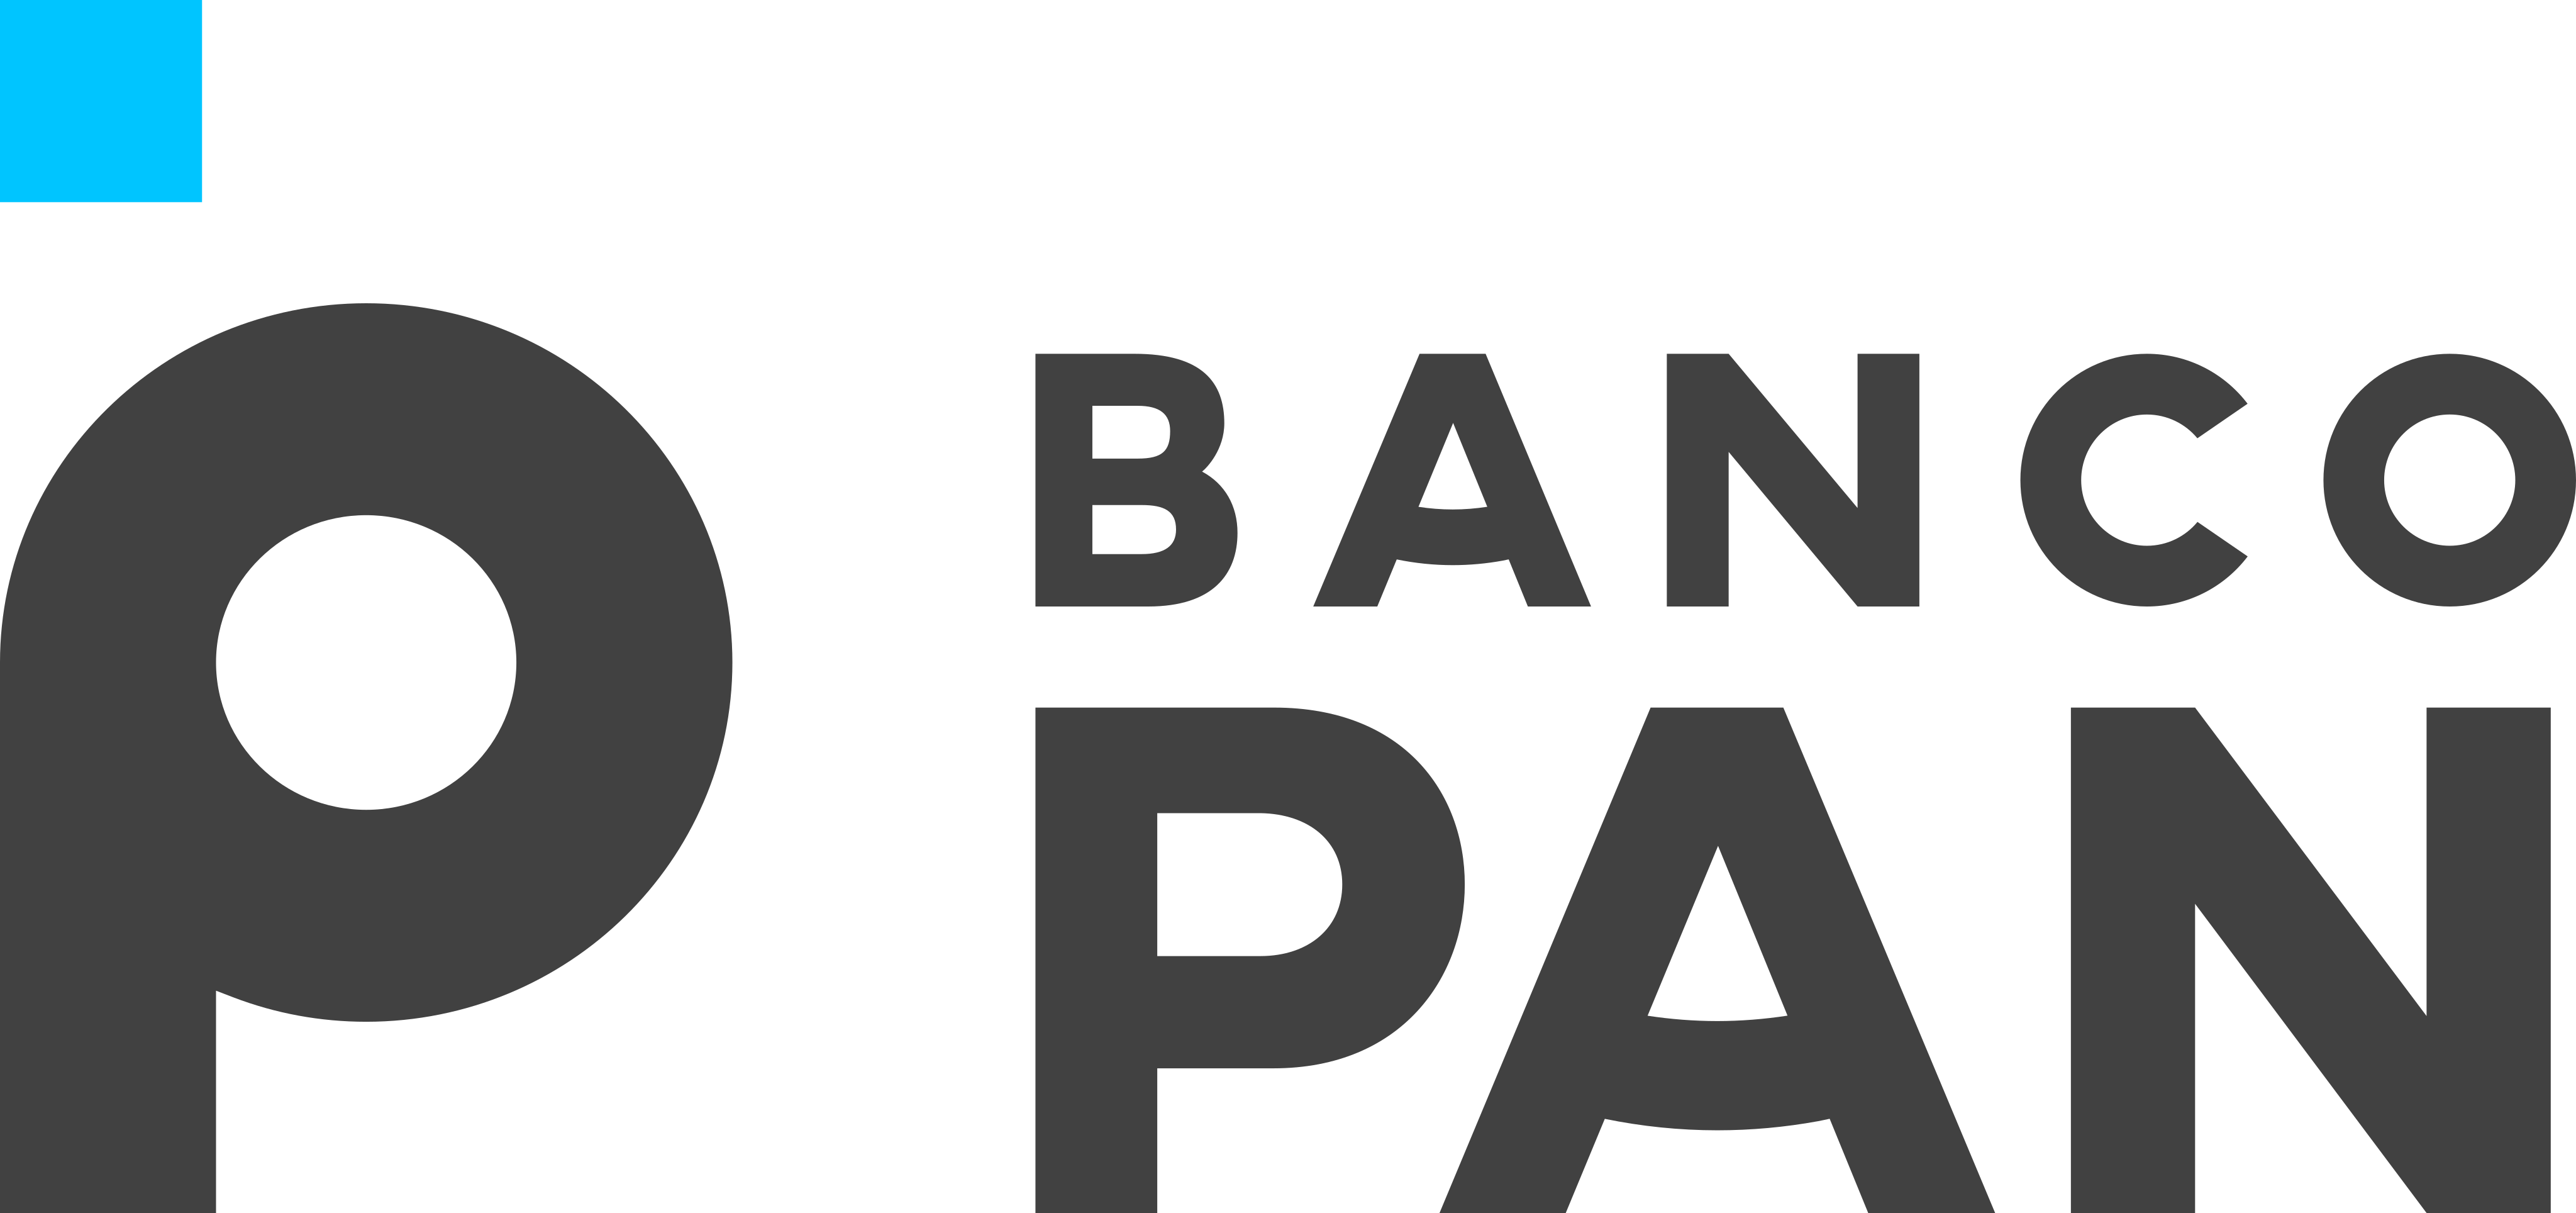 Mas, afinal, quem é o Banco Pan? Fonte: Banco Pan.